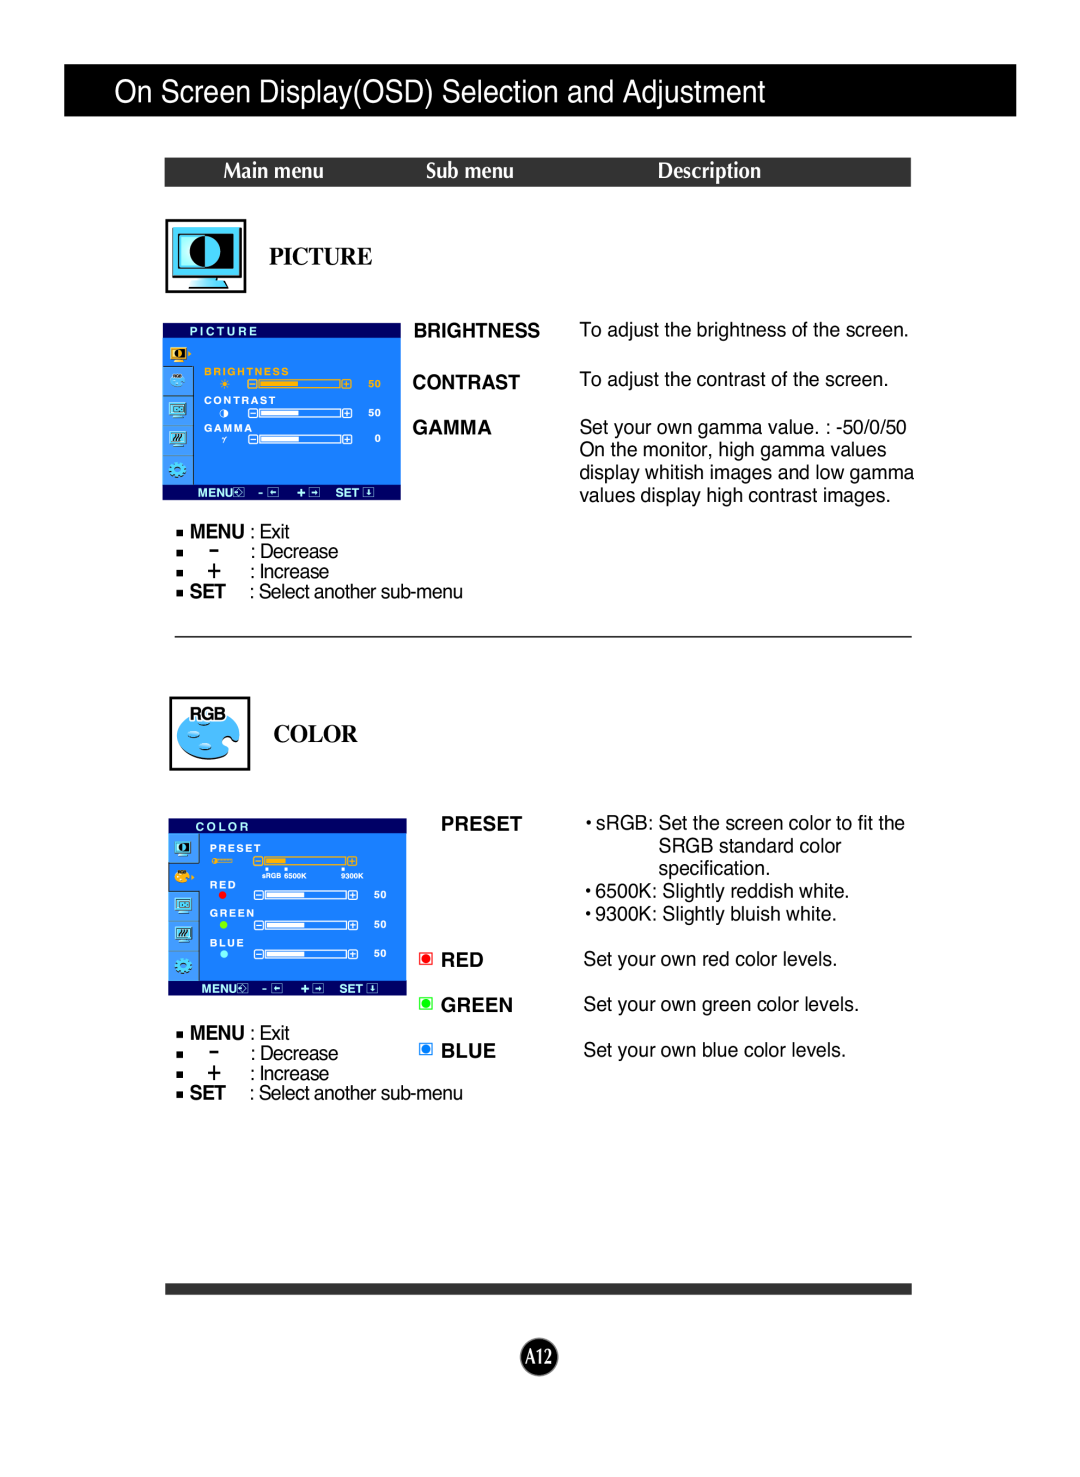 LG Electronics L227WT Picture, Color, Main menu, Sub menu, Description, On Screen DisplayOSD Selection and Adjustment 